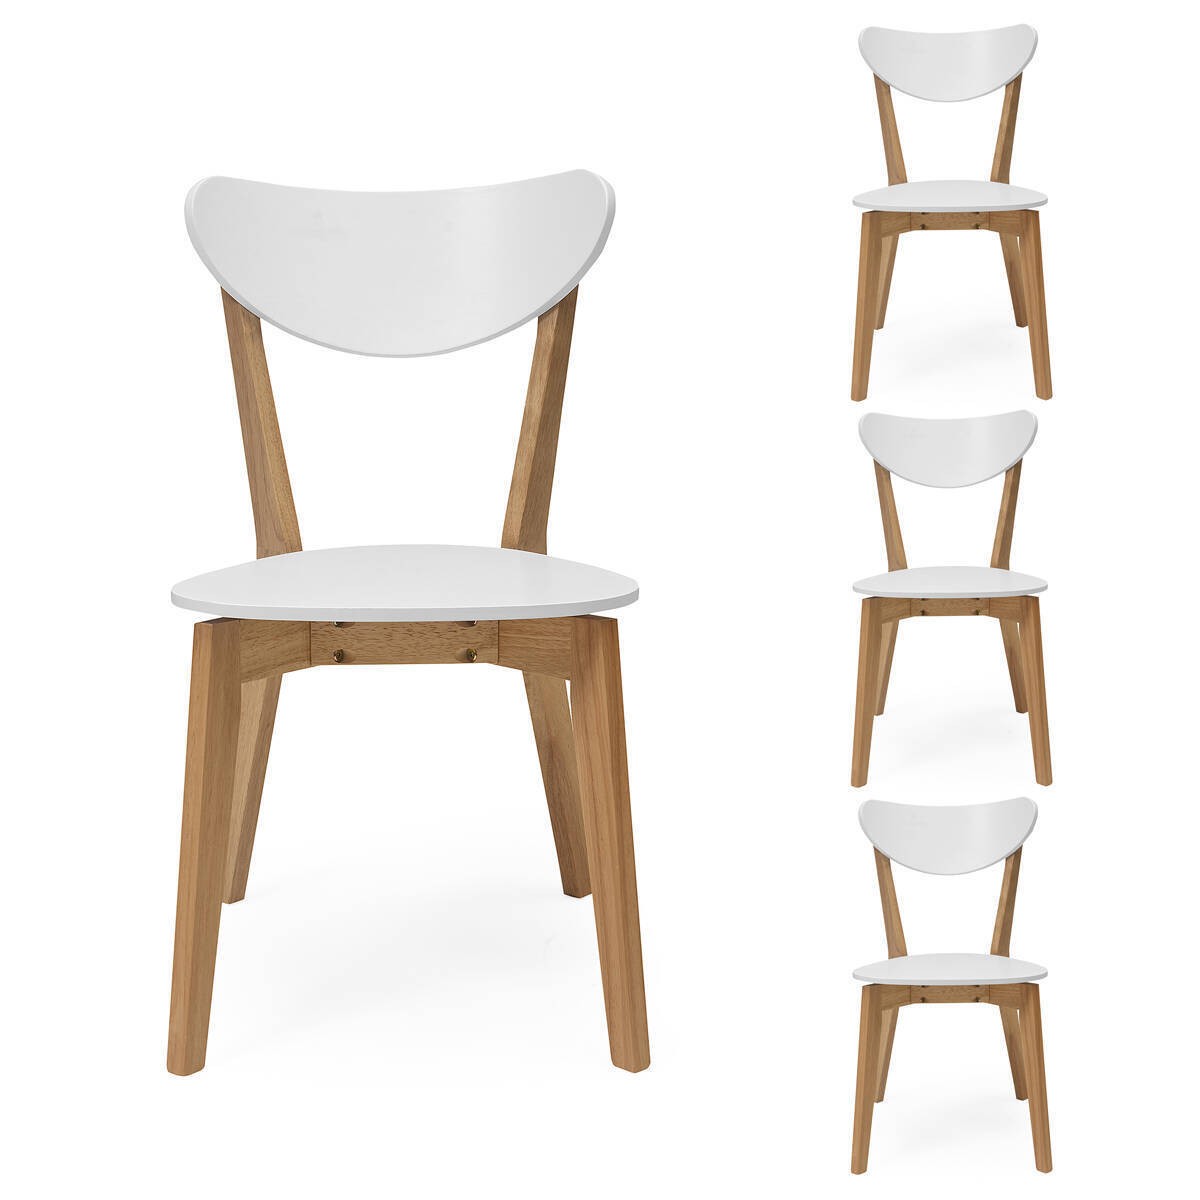 Conjunto de comedor de diseño nórdico MELAKA mesa extensible y 4 silla